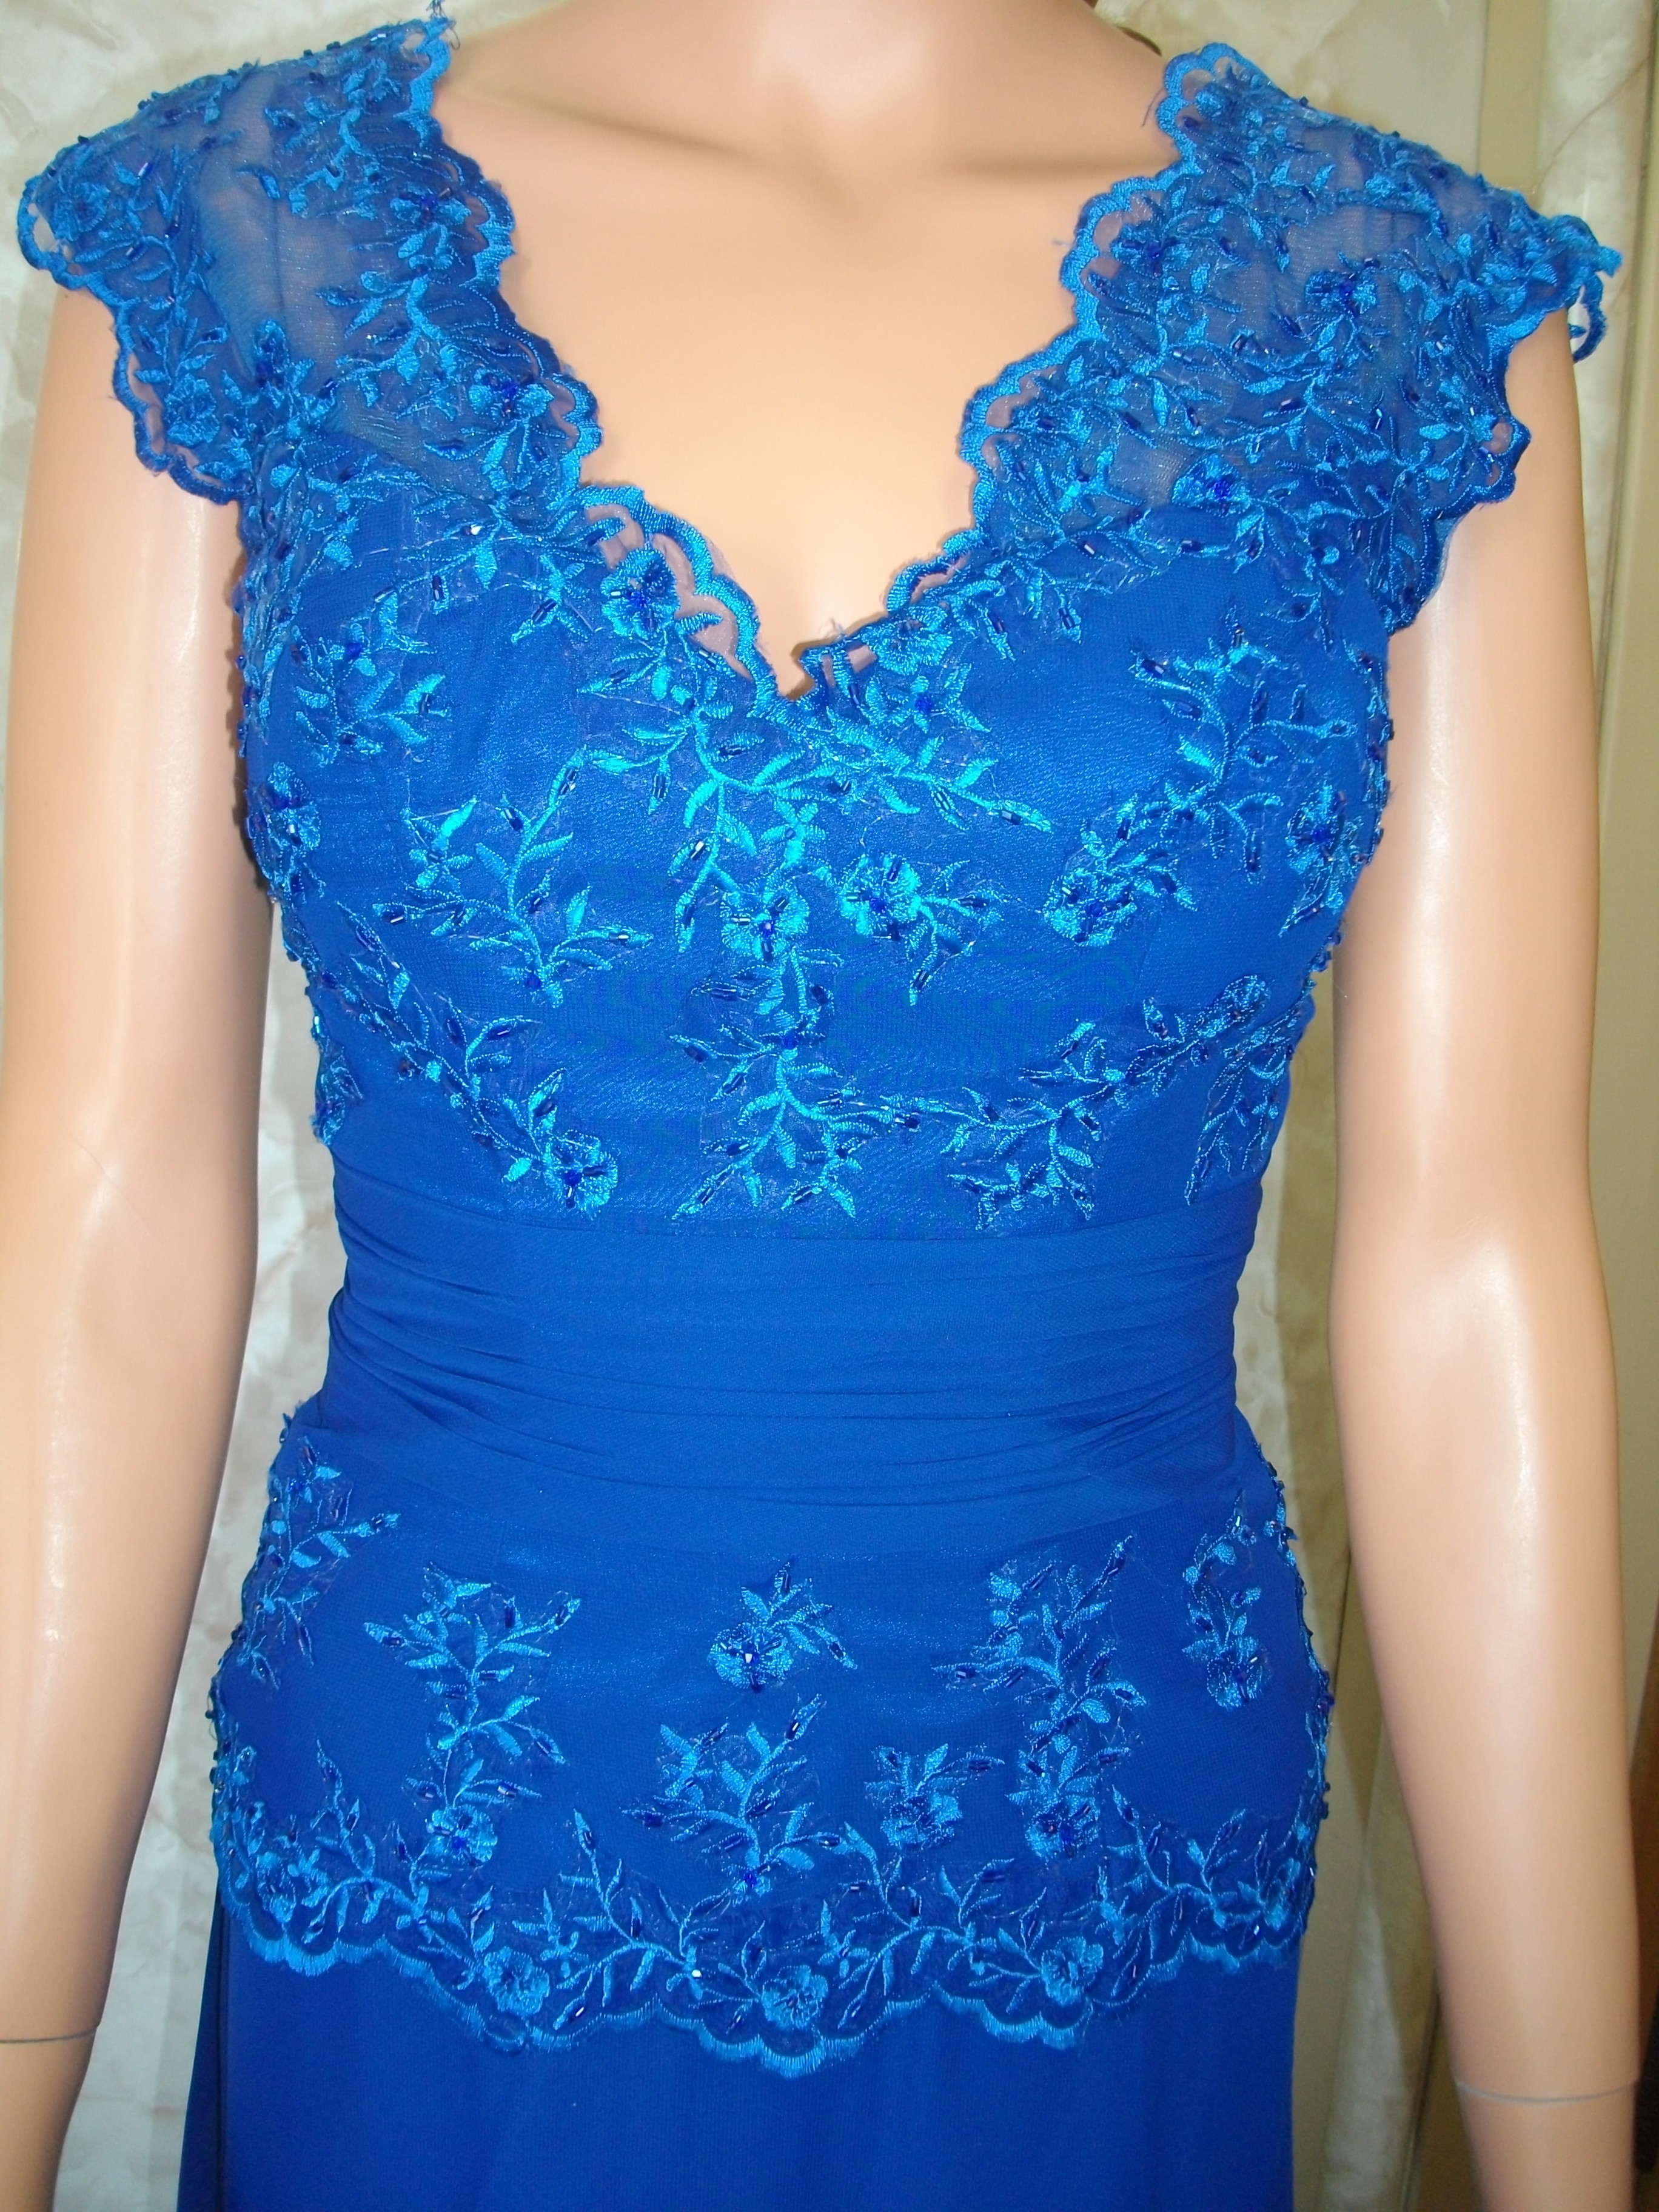 royal blue dress sale